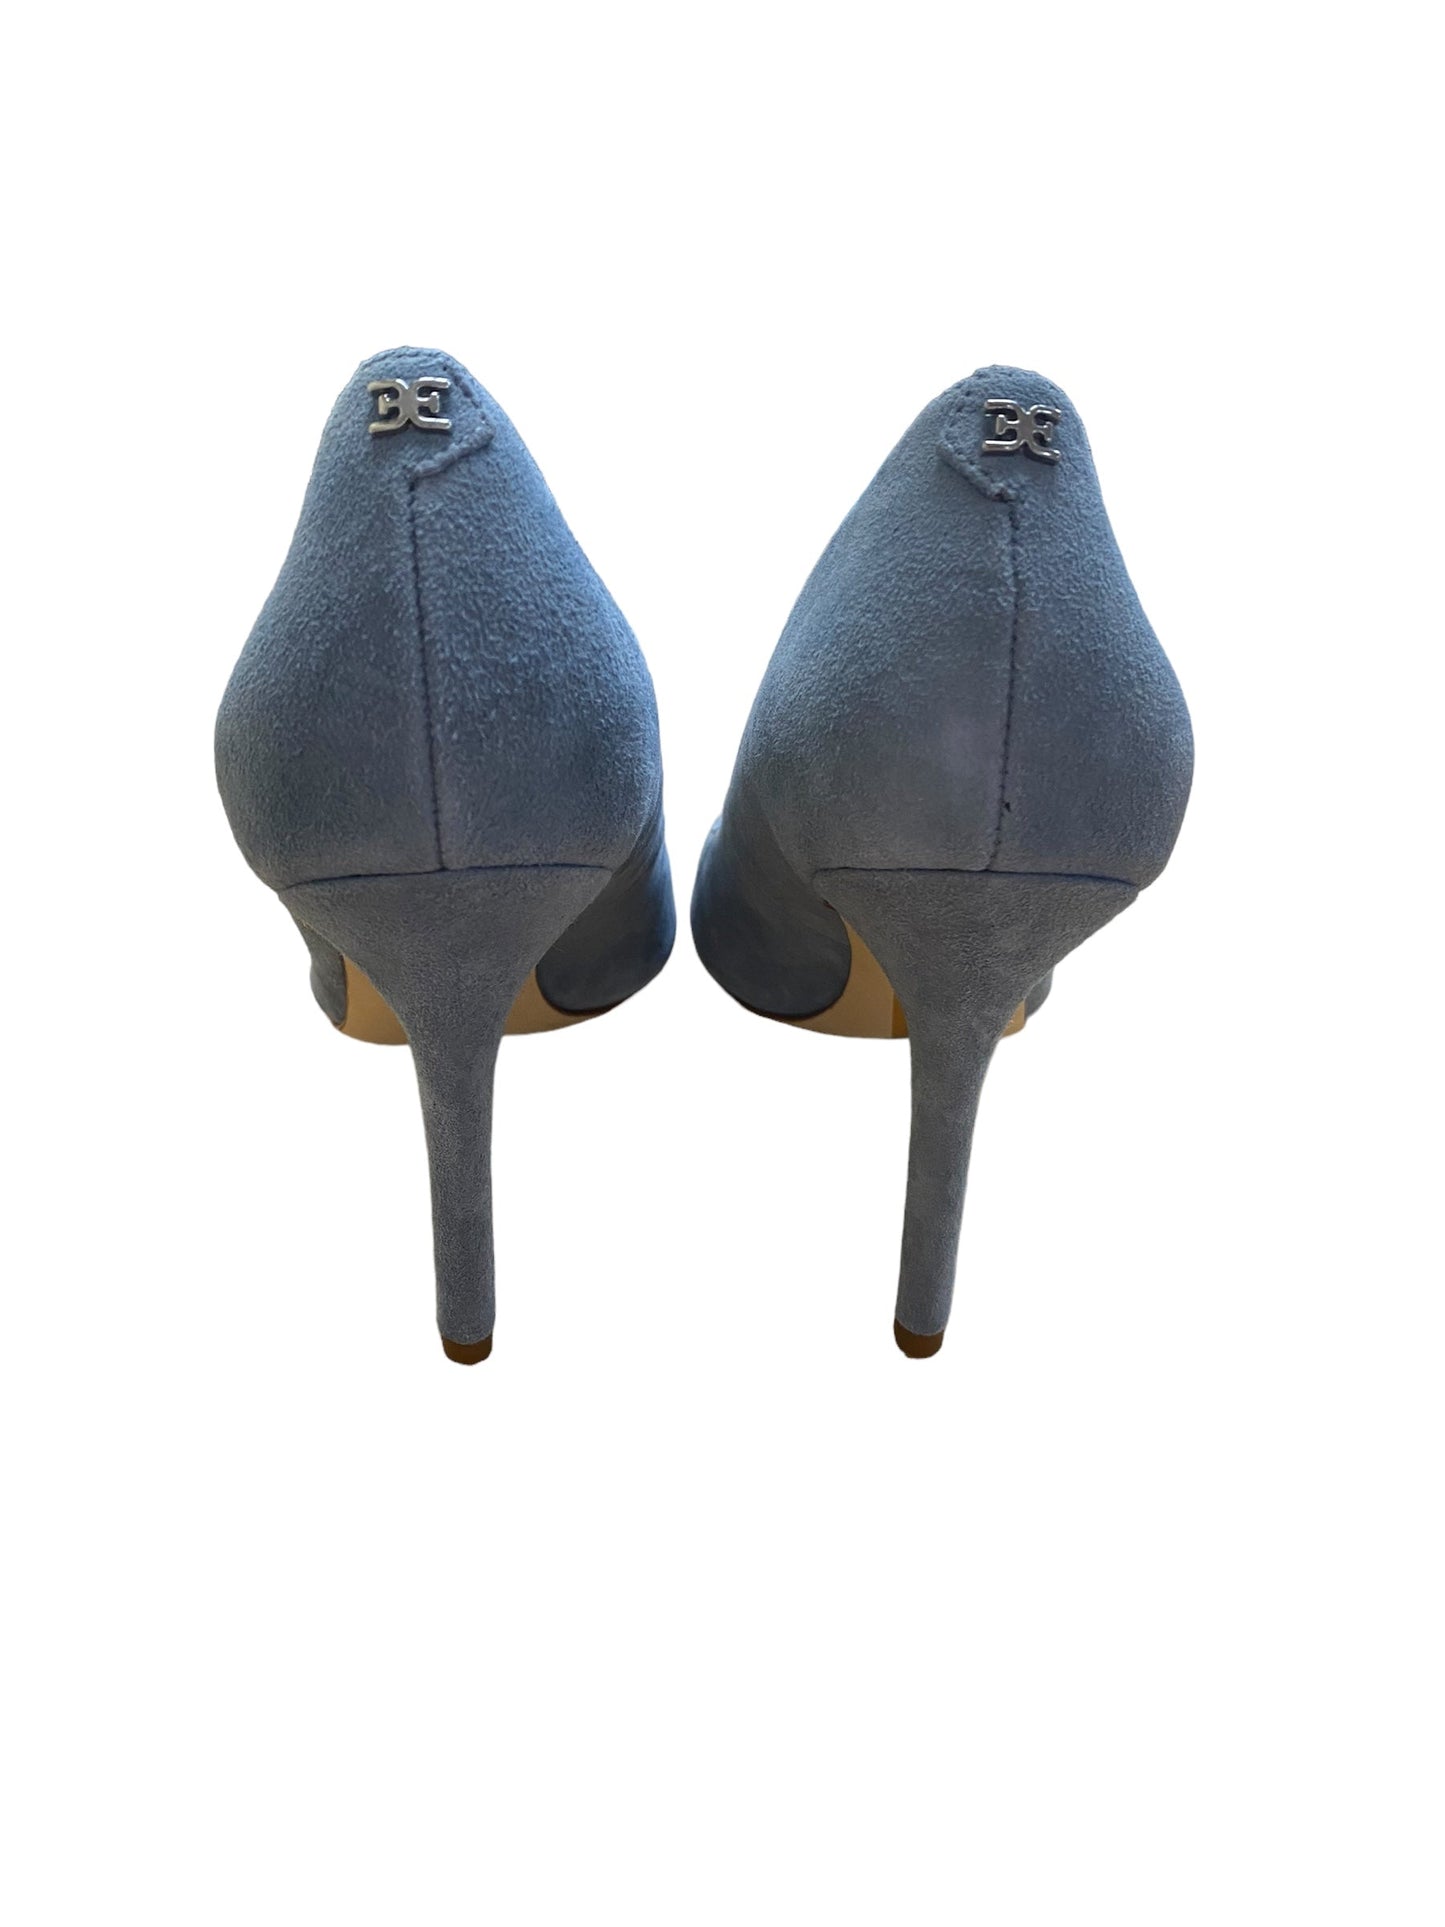 Blue Shoes Heels Stiletto Sam Edelman, Size 6